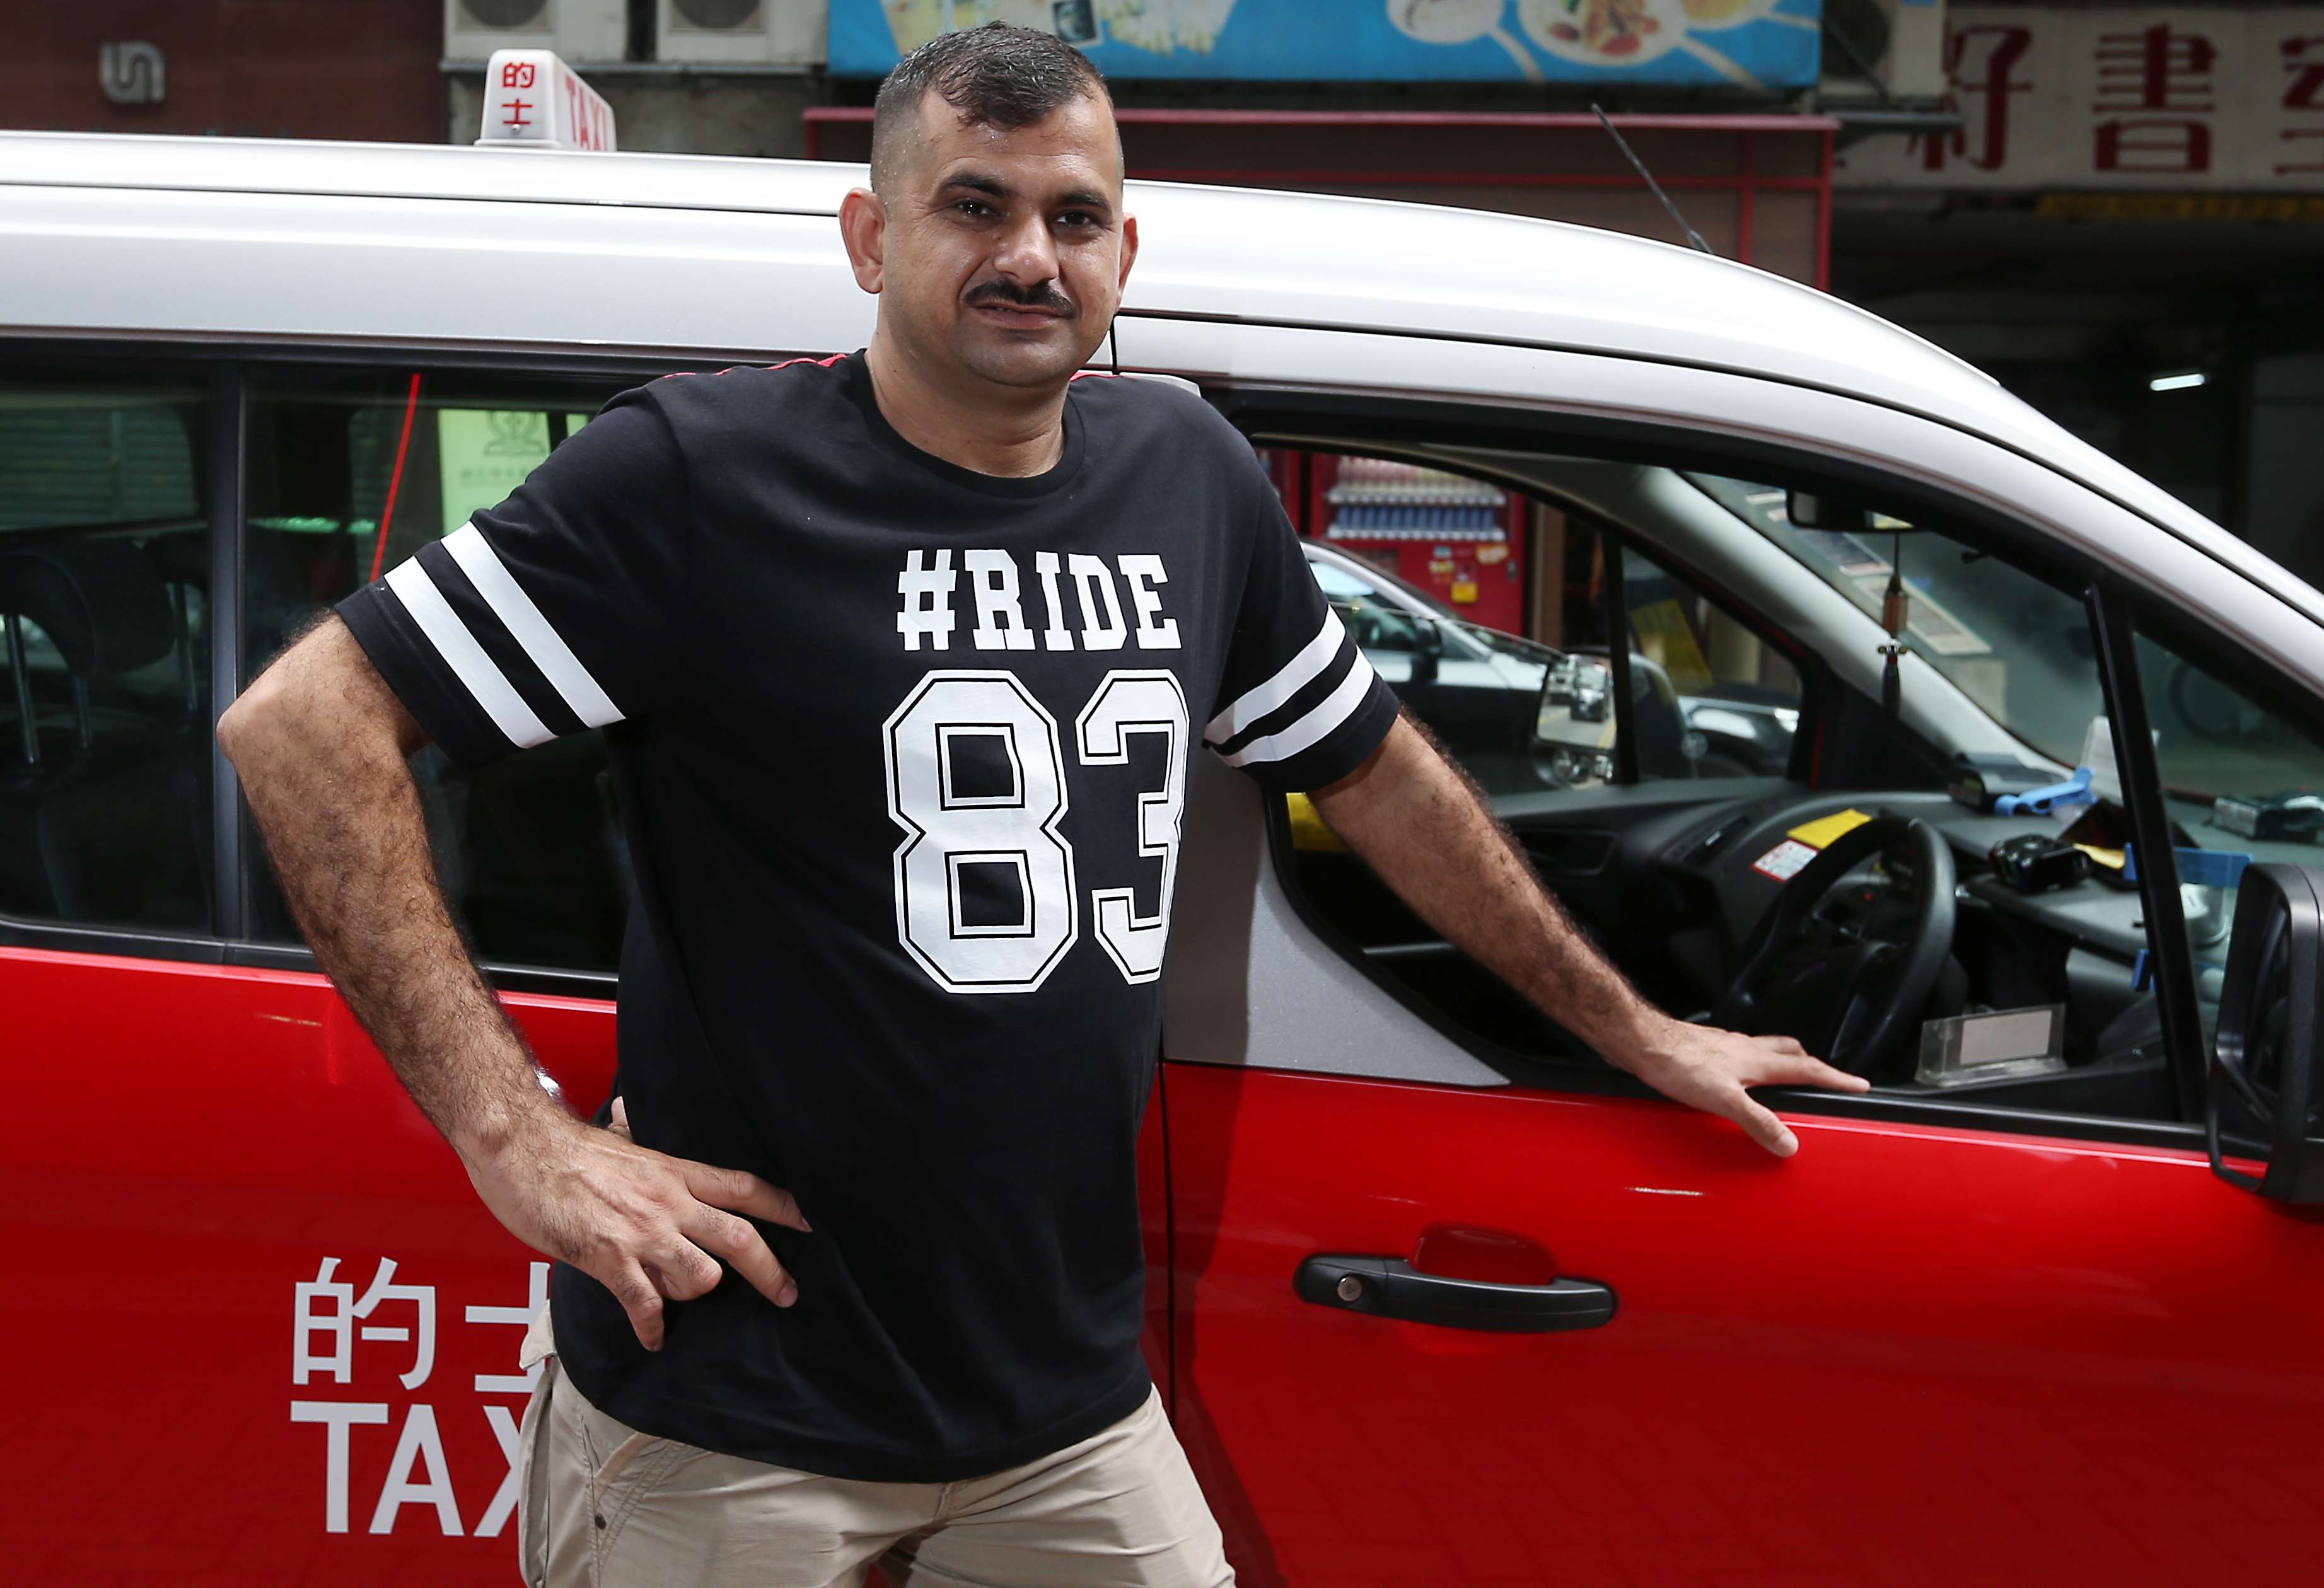 Shehzad Mamood Khan is Hong Kong's first ethnic minority taxi driver. Photo: K. Y. Cheng